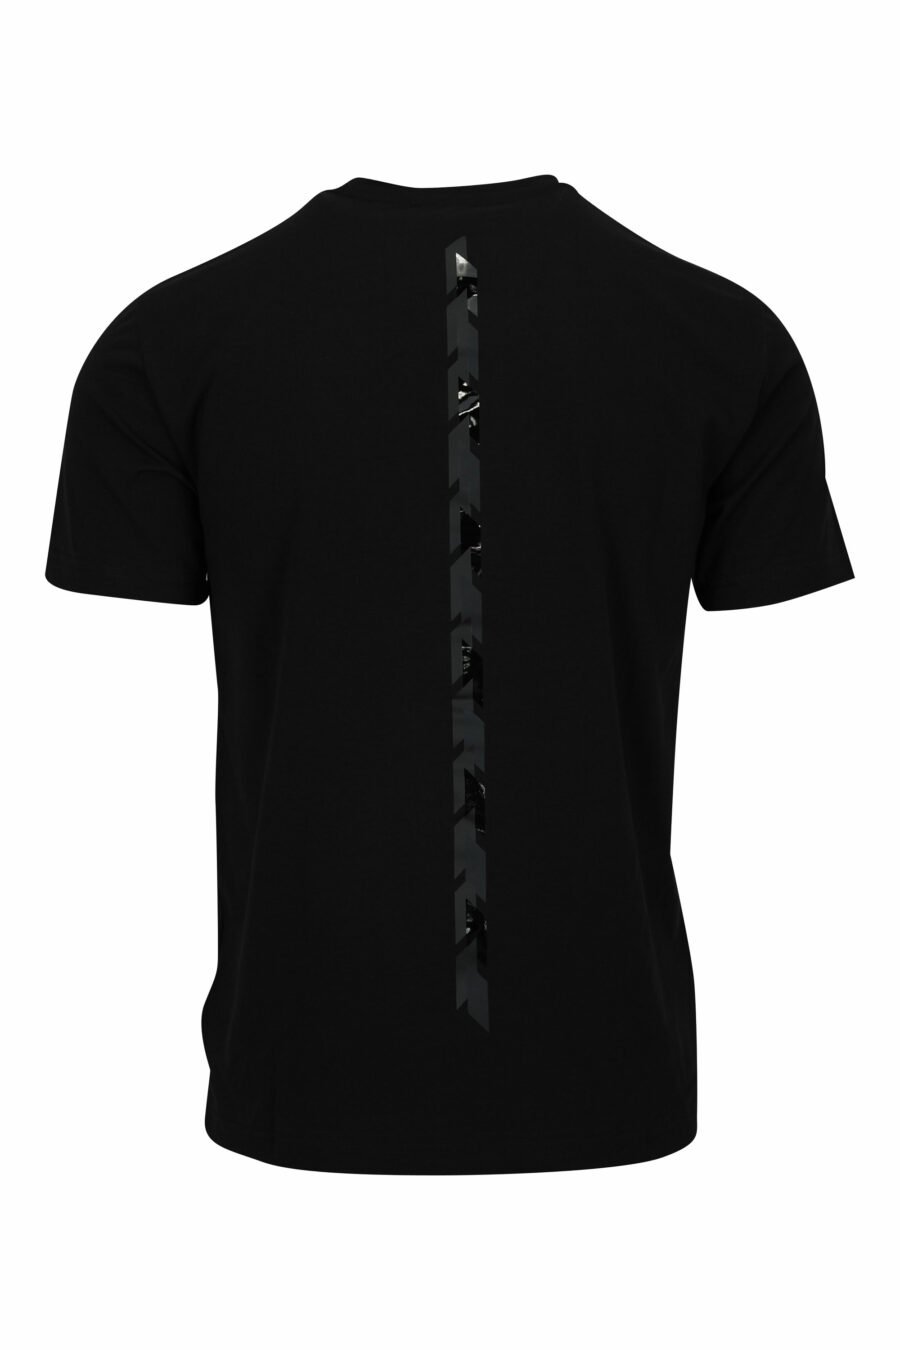 Camiseta negra con maxilogo "lux identity" triangulo - 8058947491148 1